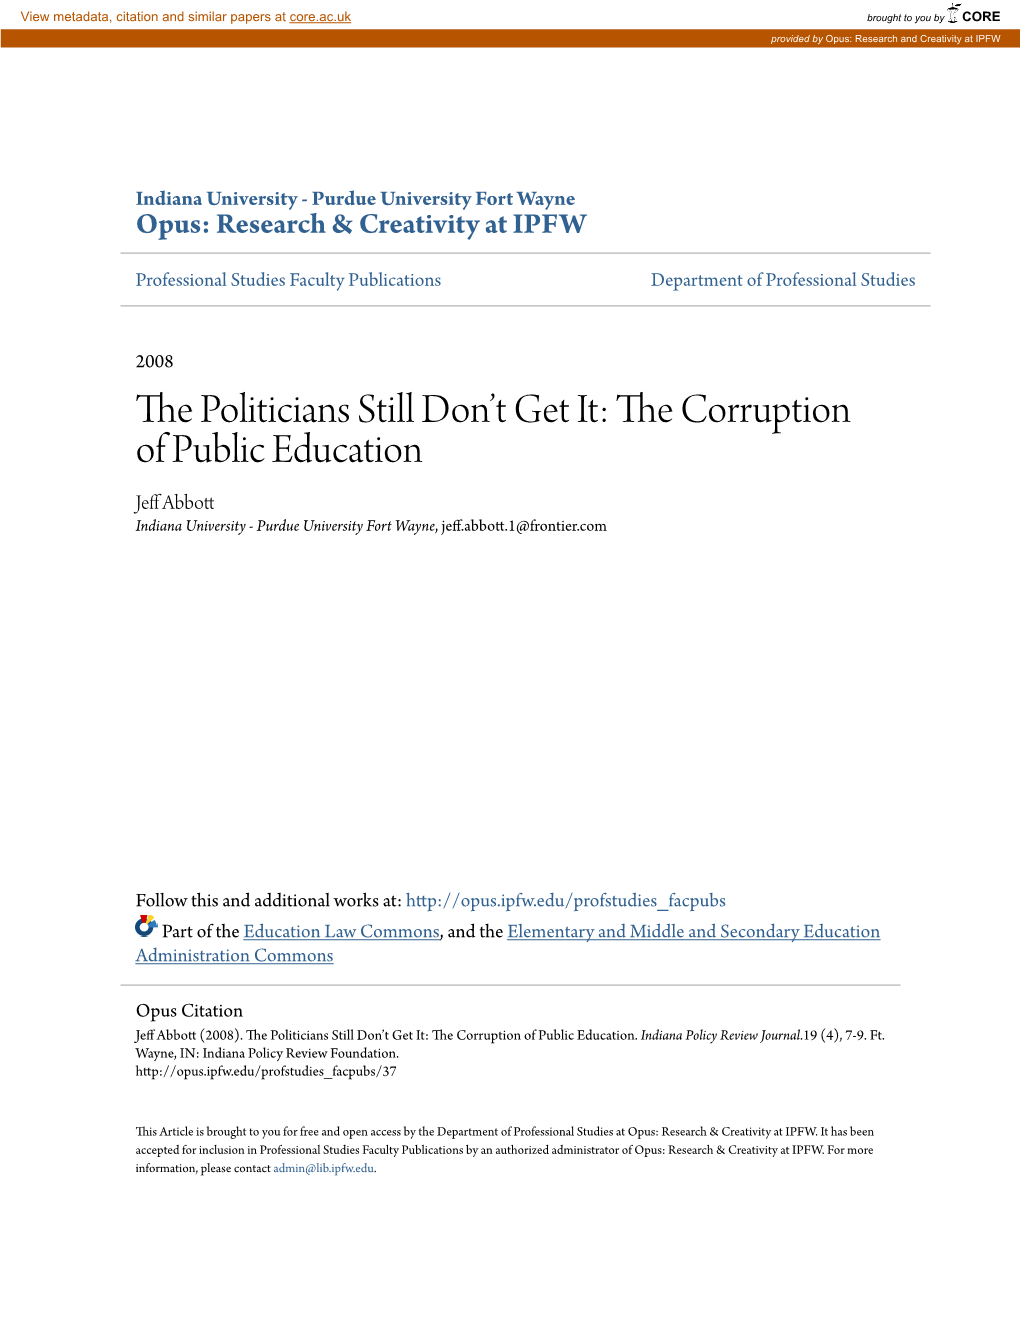 The Corruption of Public Education